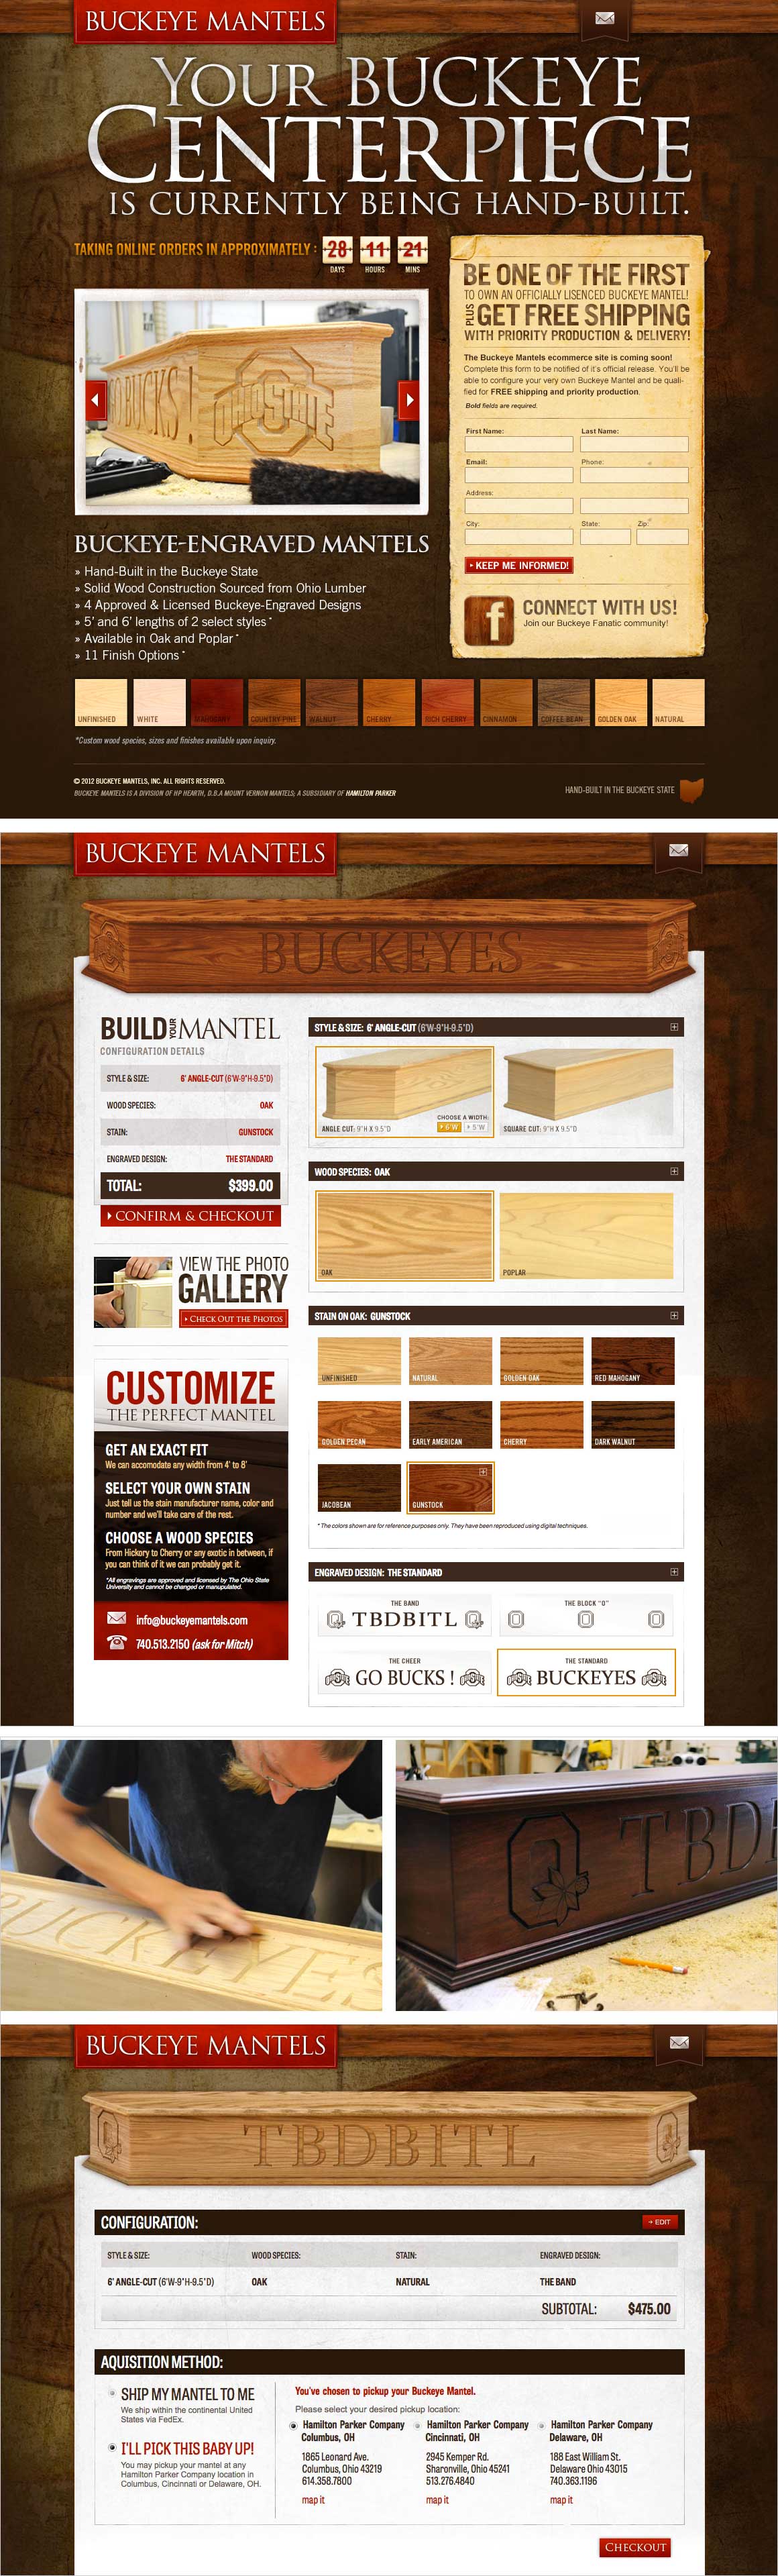 Buckeye Mantels Website Design